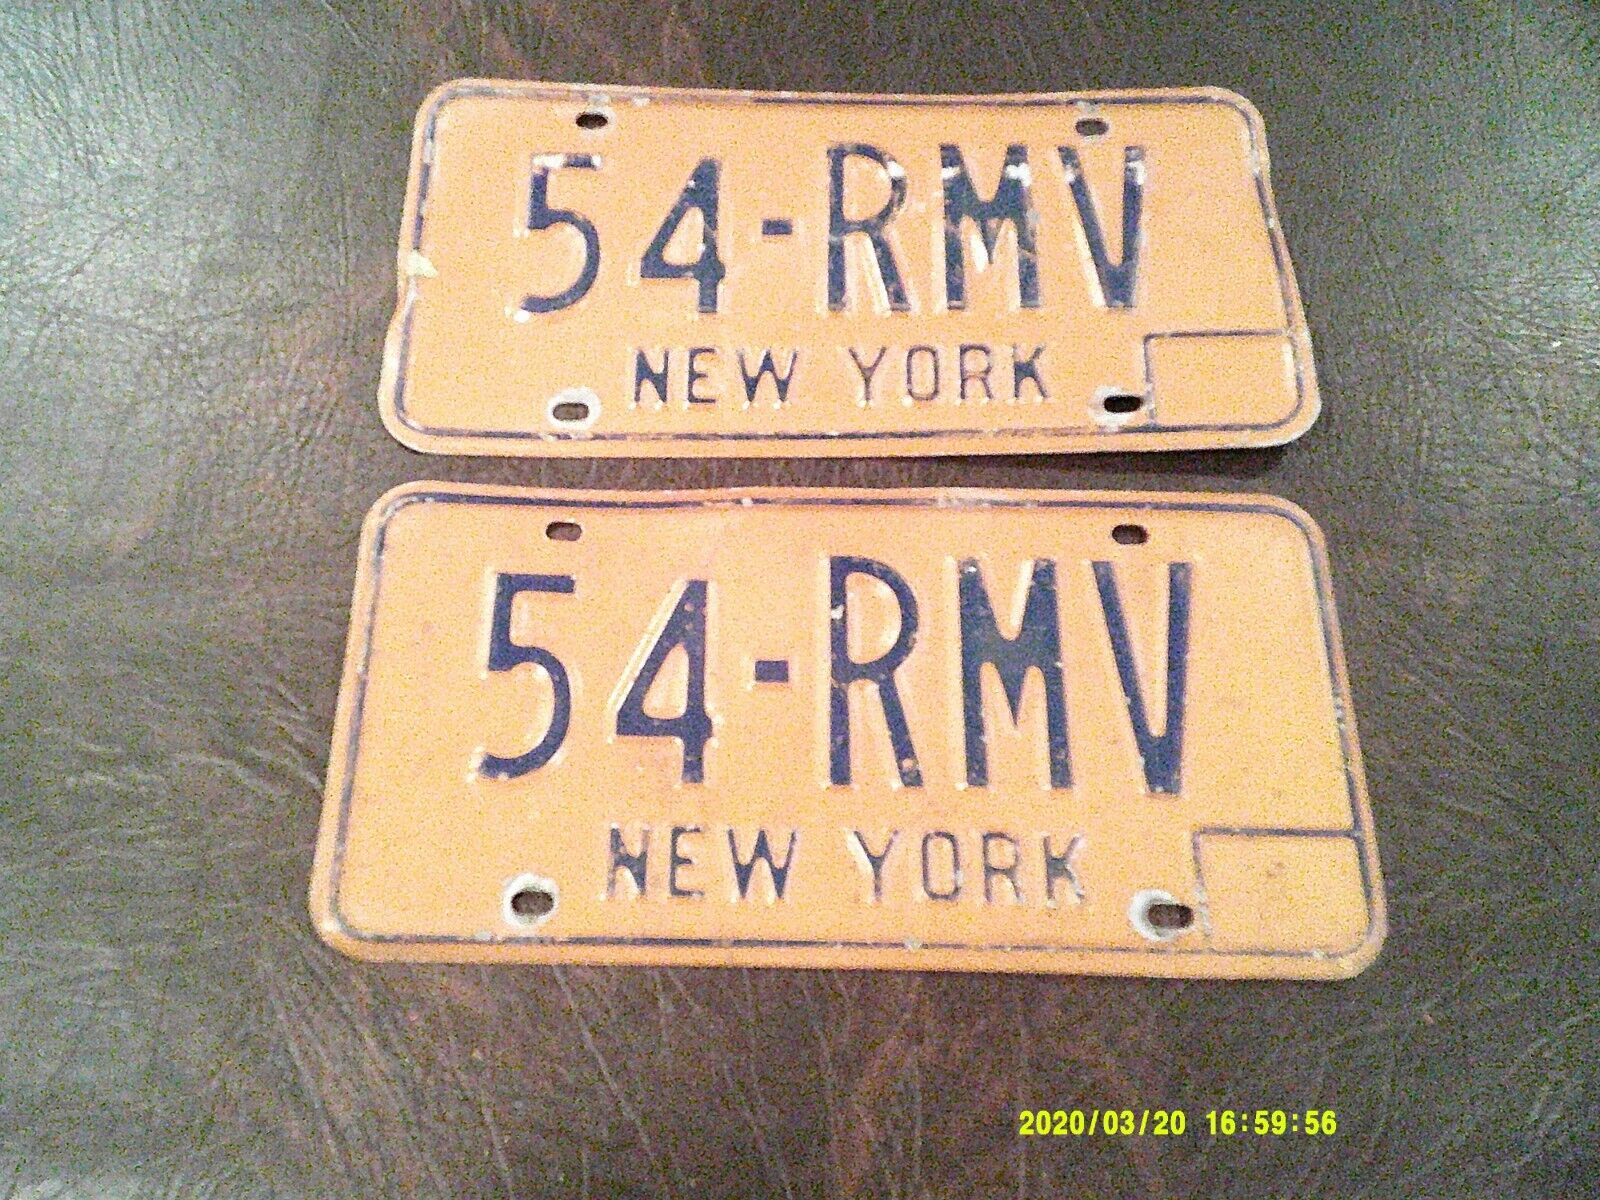 1974 New York License Plate Pair